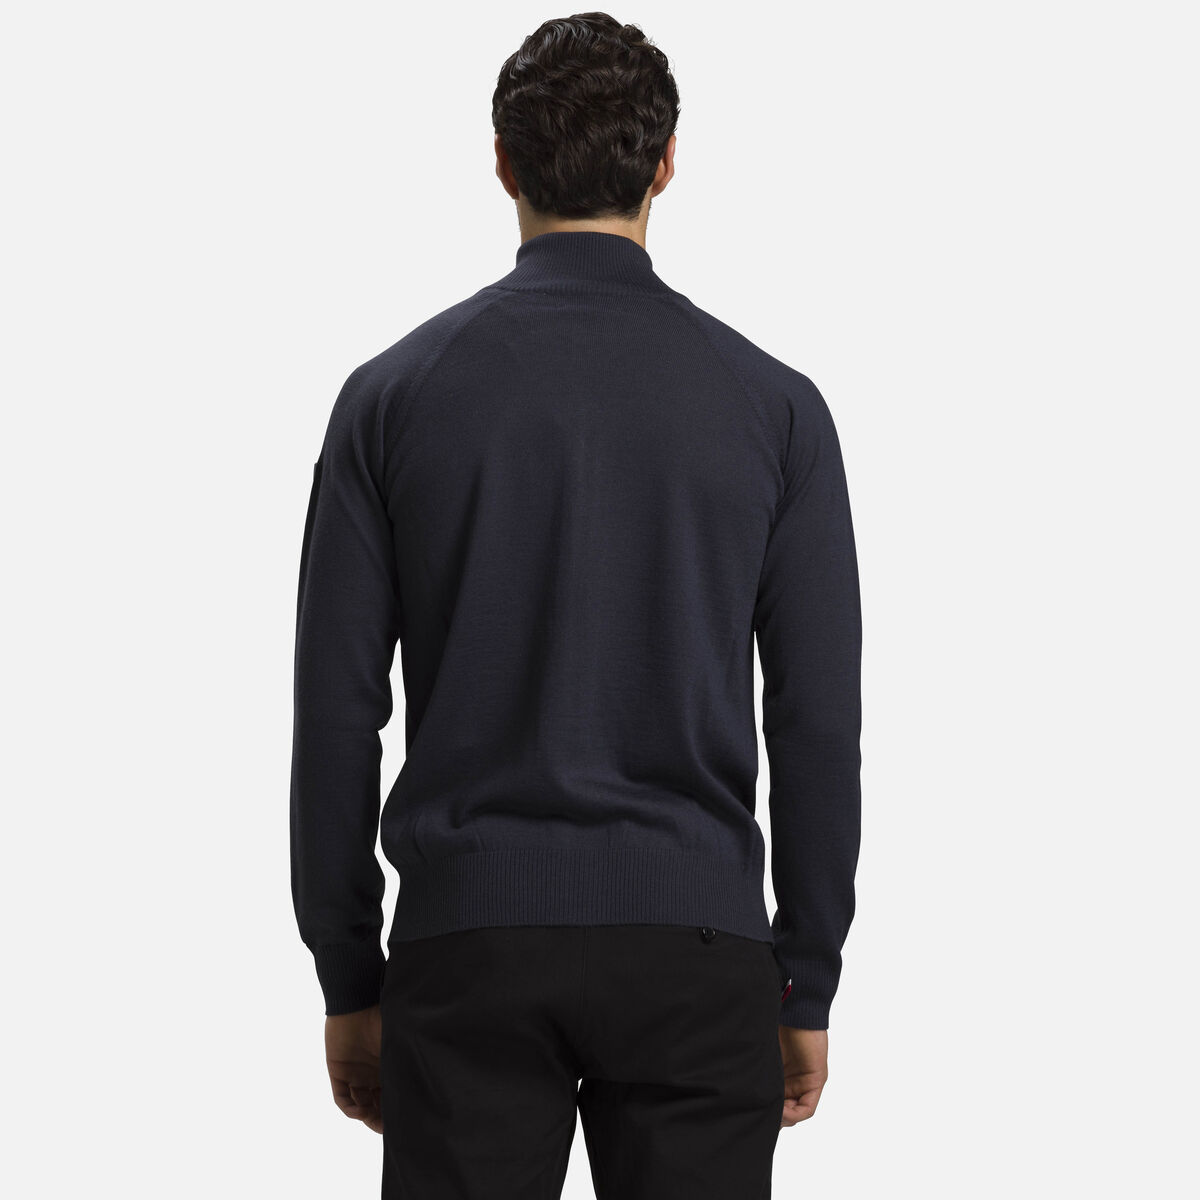 Men's Anthelme Full Zip Sweater